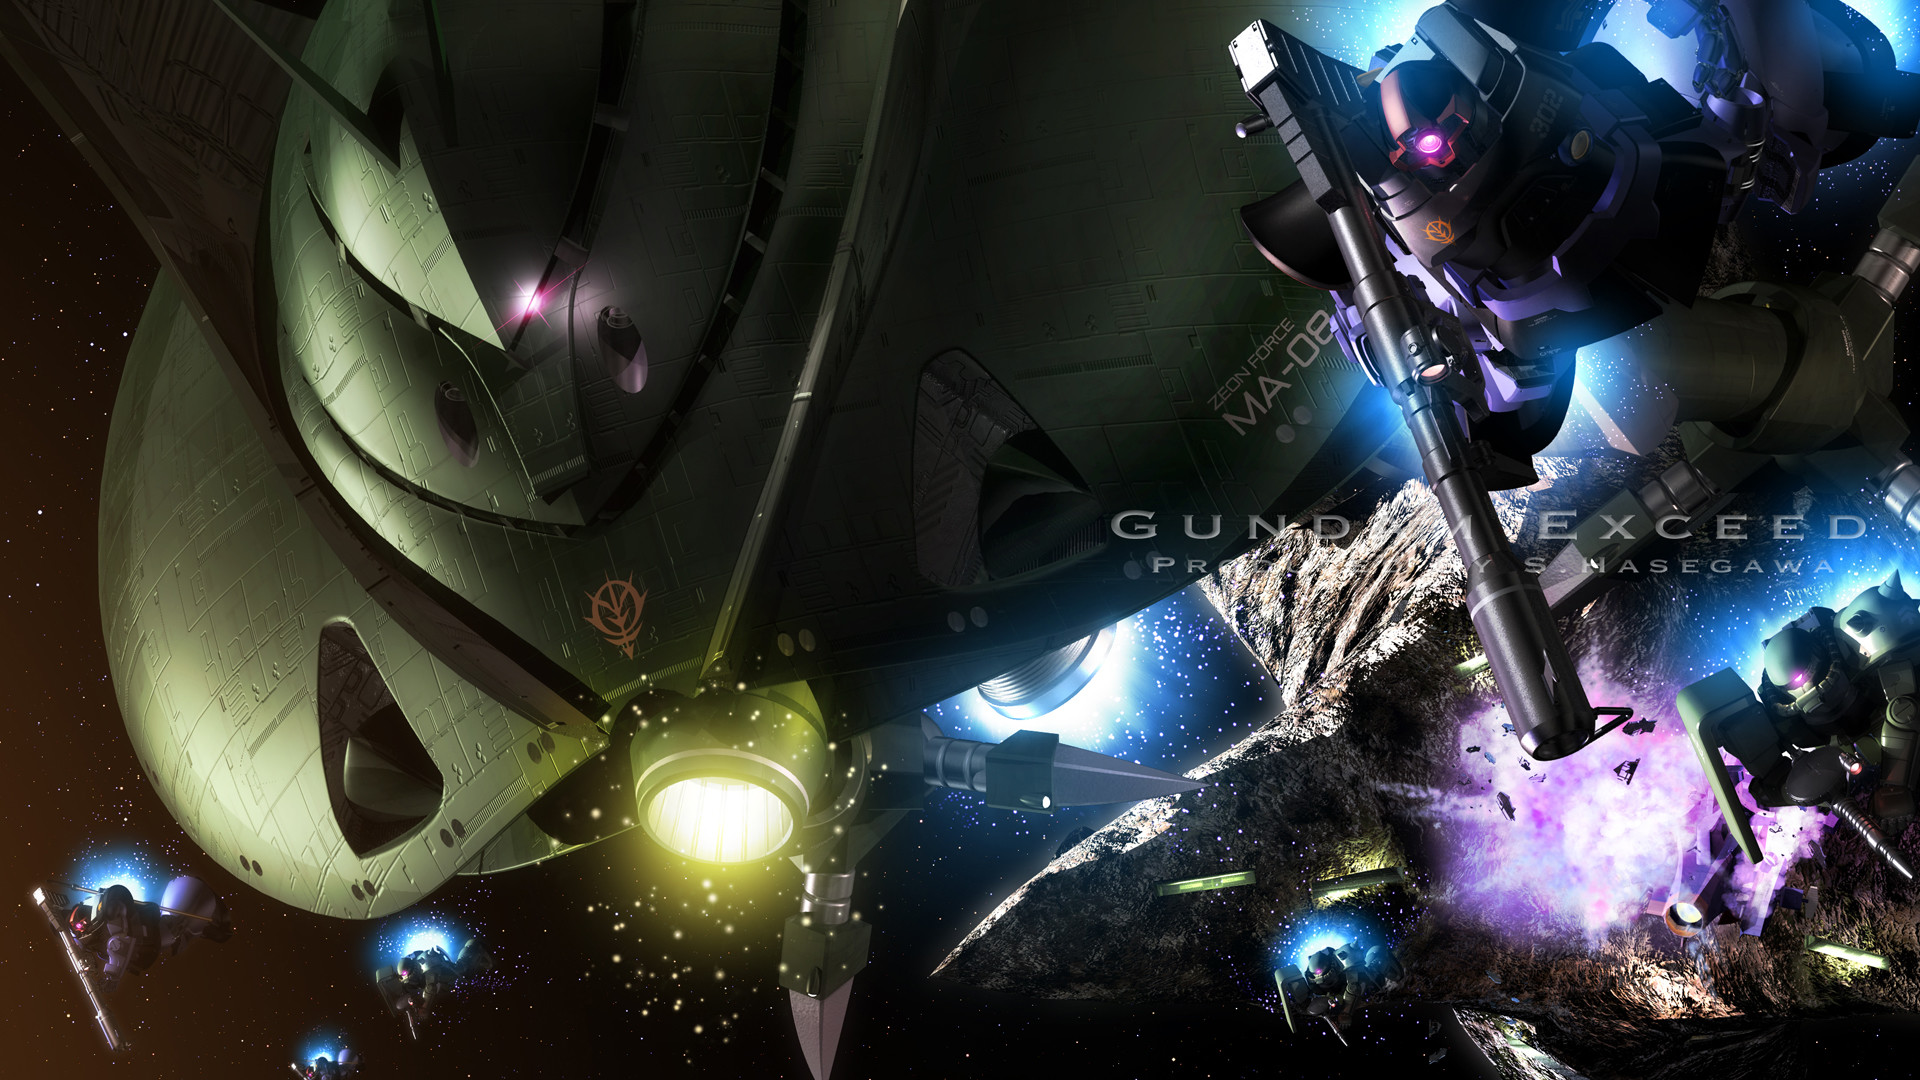 Gundam Wing Deathscythe #777000606550 (1920×1080)